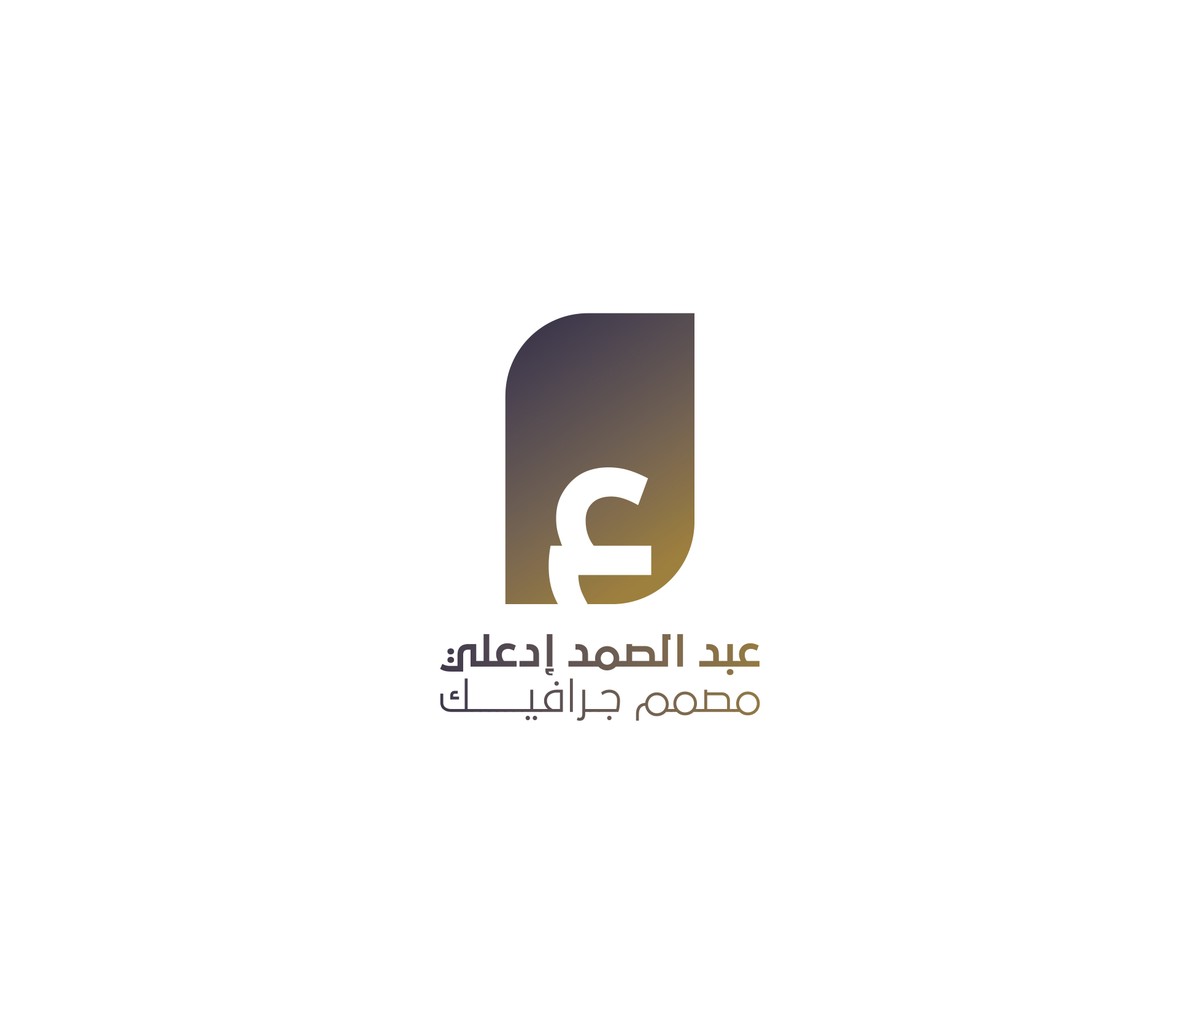 My_Final_Logo-01